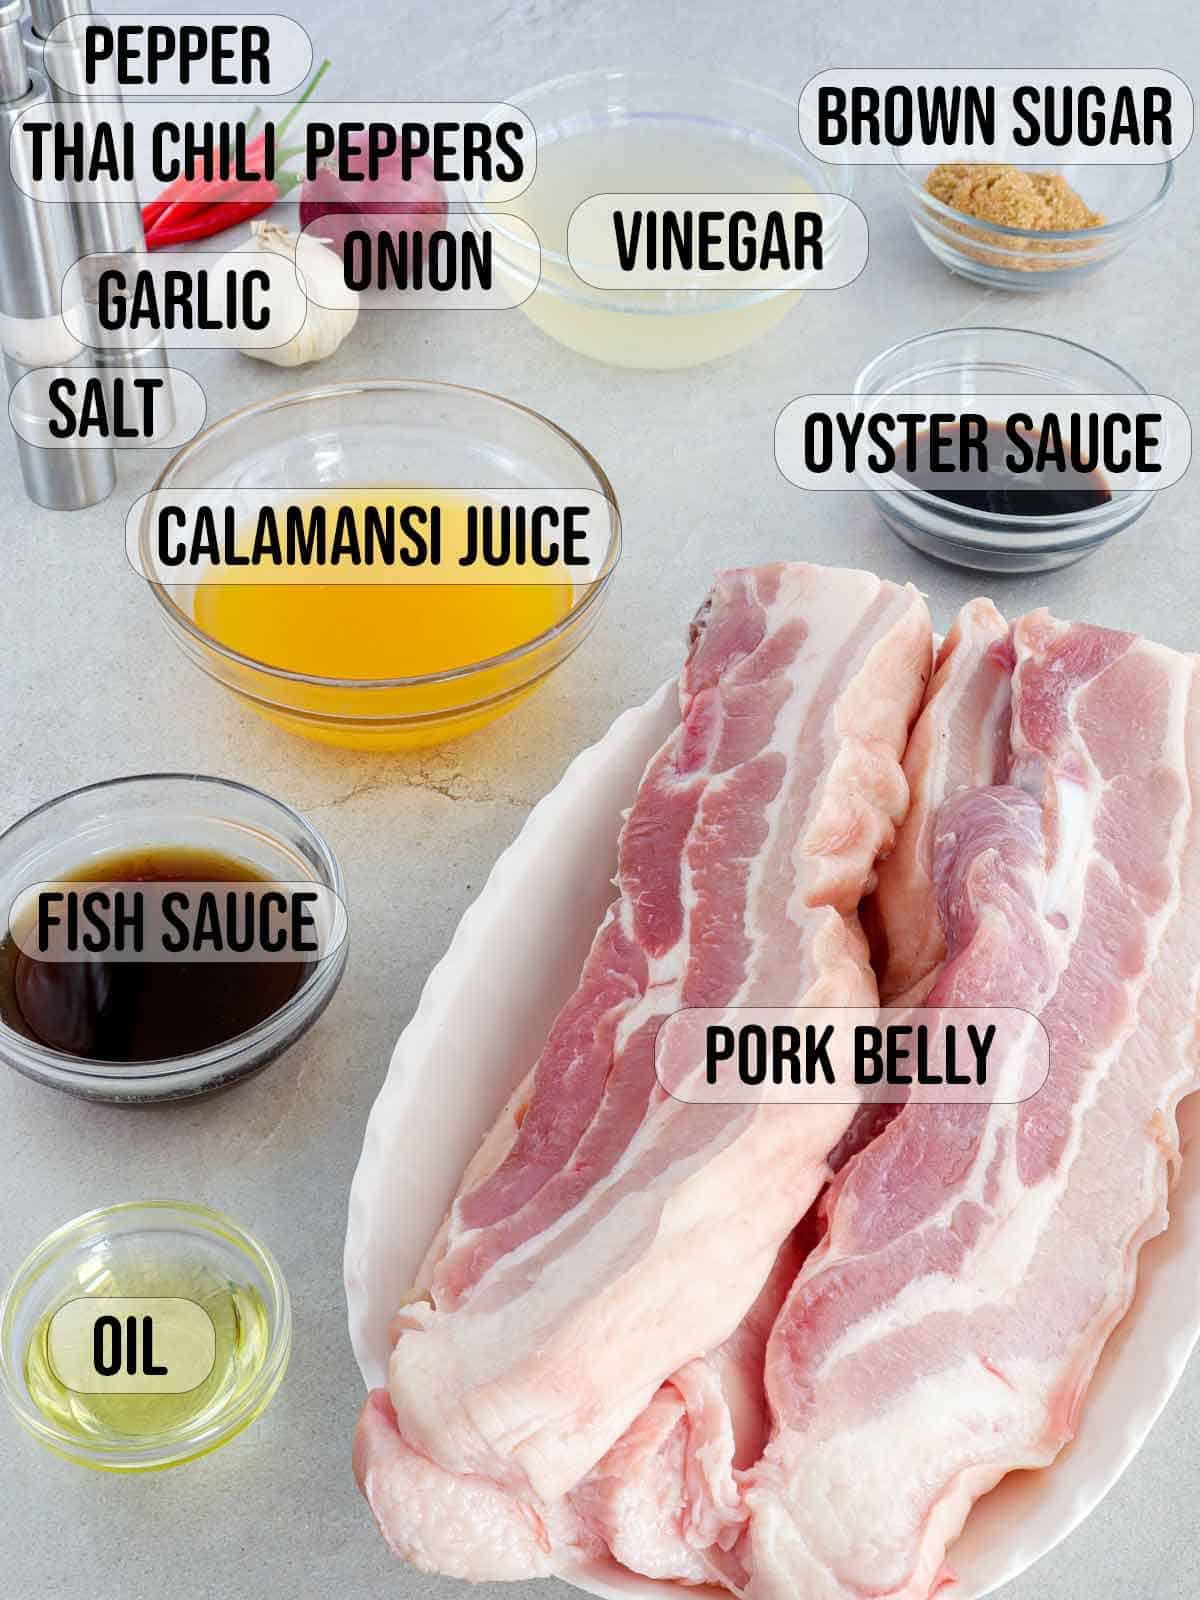 pork belly, calamansi juice, oyster sauce, soy sauce, garlic, oil, vinegar, brown sugar, onion, salt, pepper in bowls.